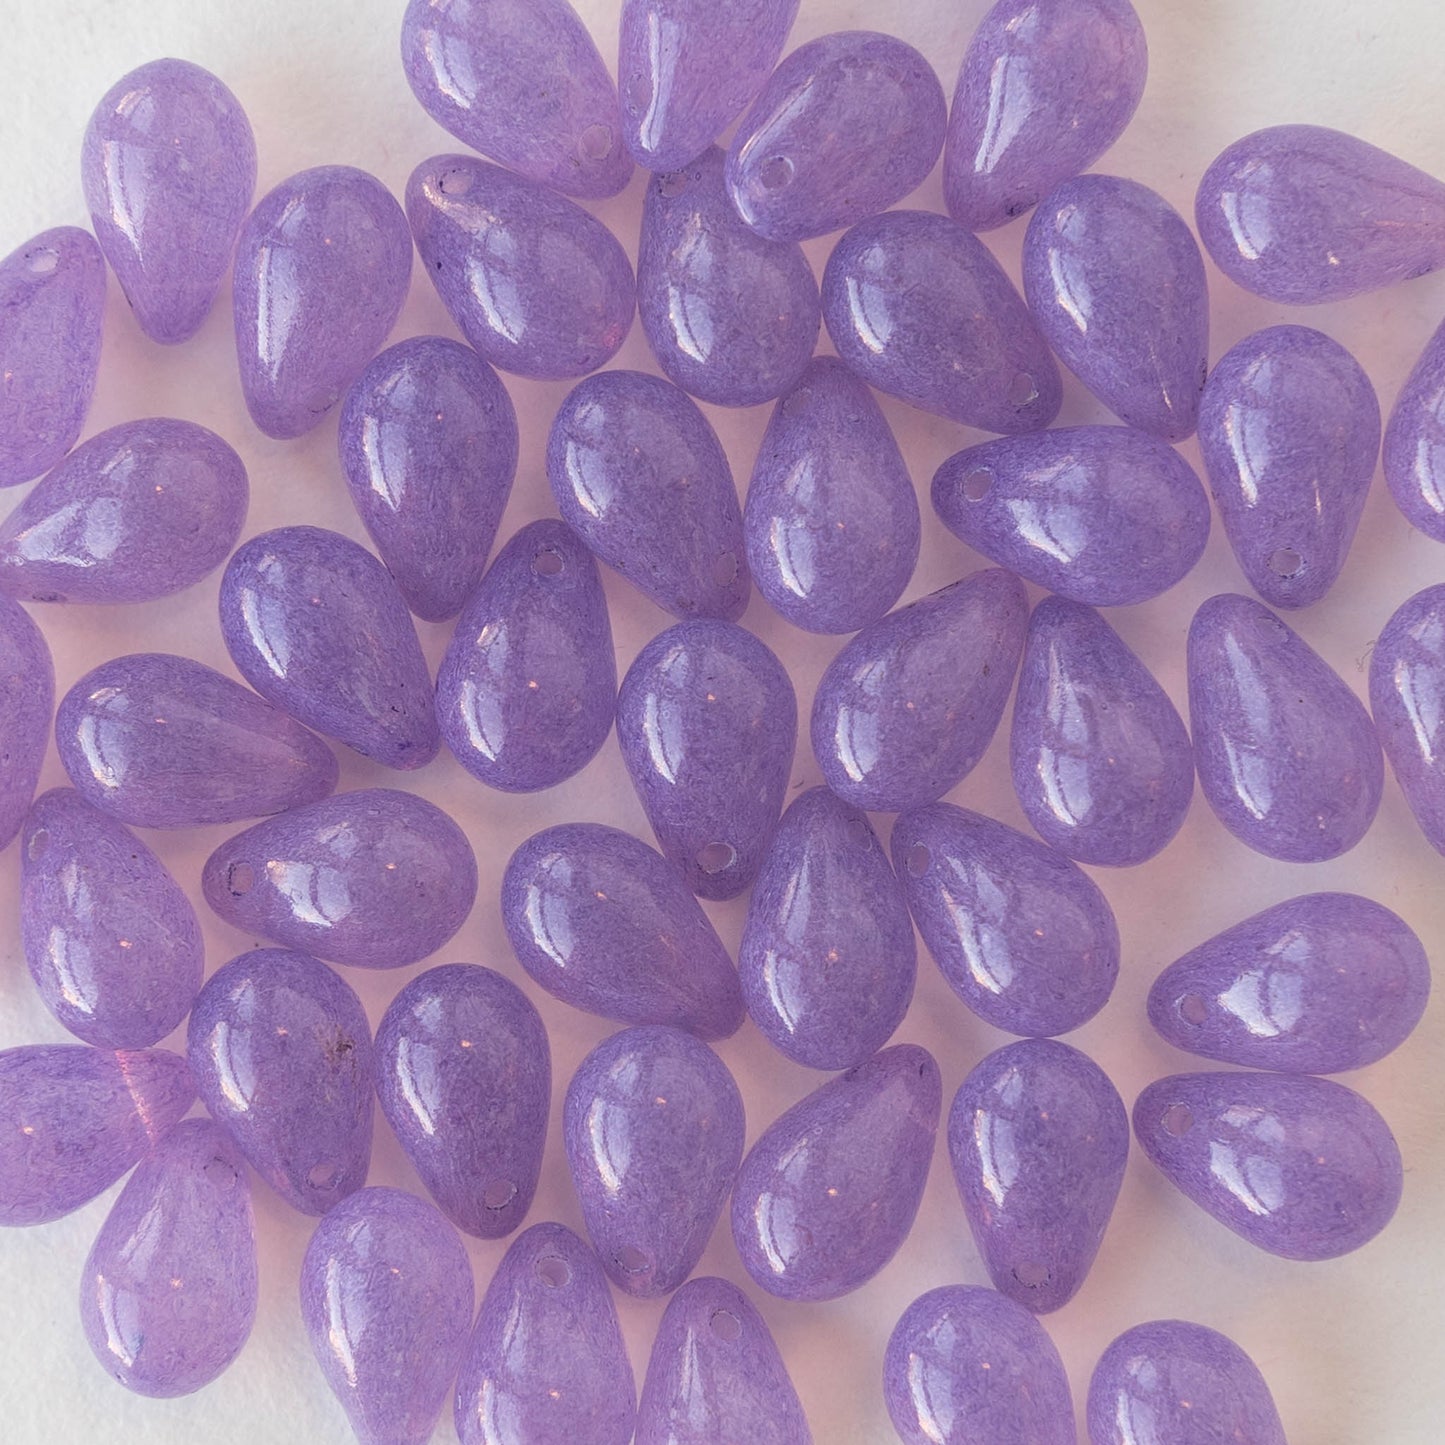 6x9mm Glass Teardrop Beads - Opaline Lilac Purple - 50 Beads